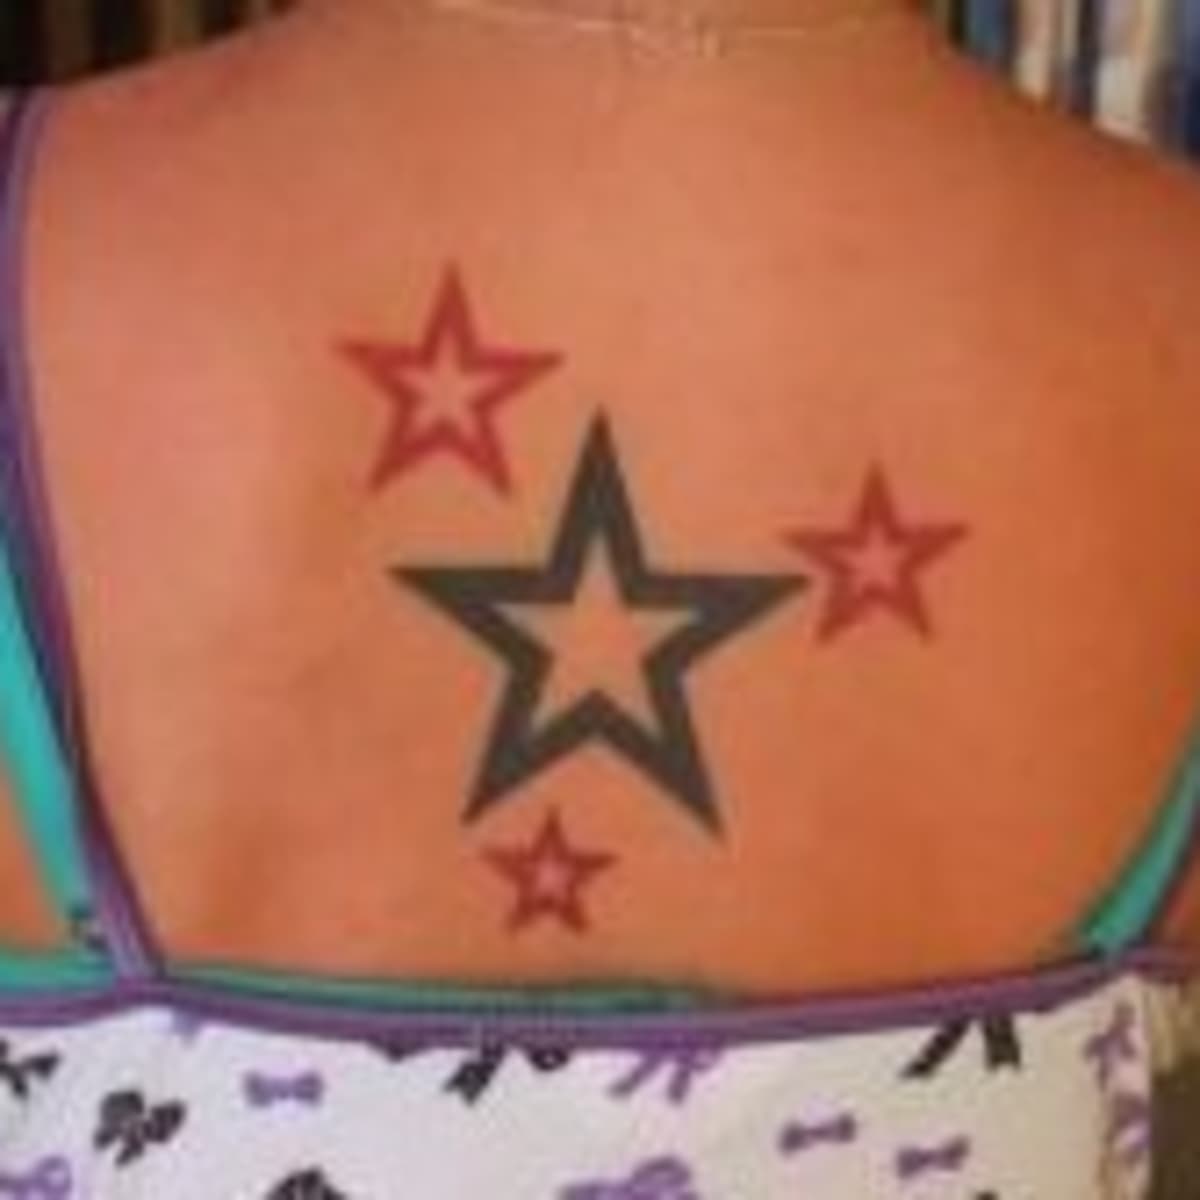 155 Star Tattoos That Will Make You Shine  Wild Tattoo Art